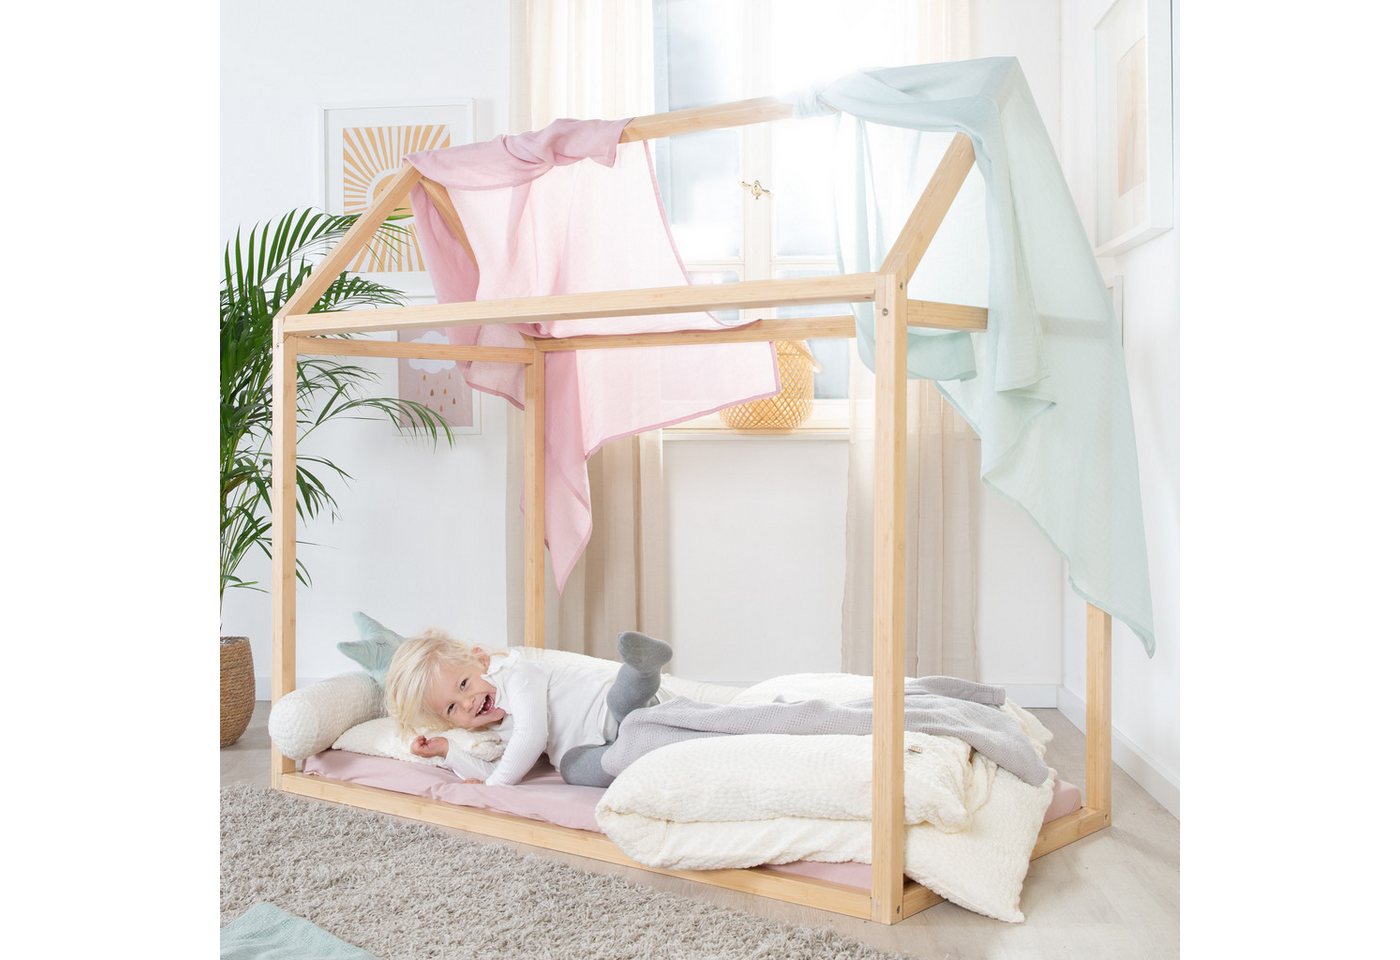 roba® Kinderbett Hausbett - nach Montessori Prinzip - FSC zertifiziertes Massivholz, Hausbett - Babybett zum Spielen, Lesen & Kuscheln - Bambus natur von roba®